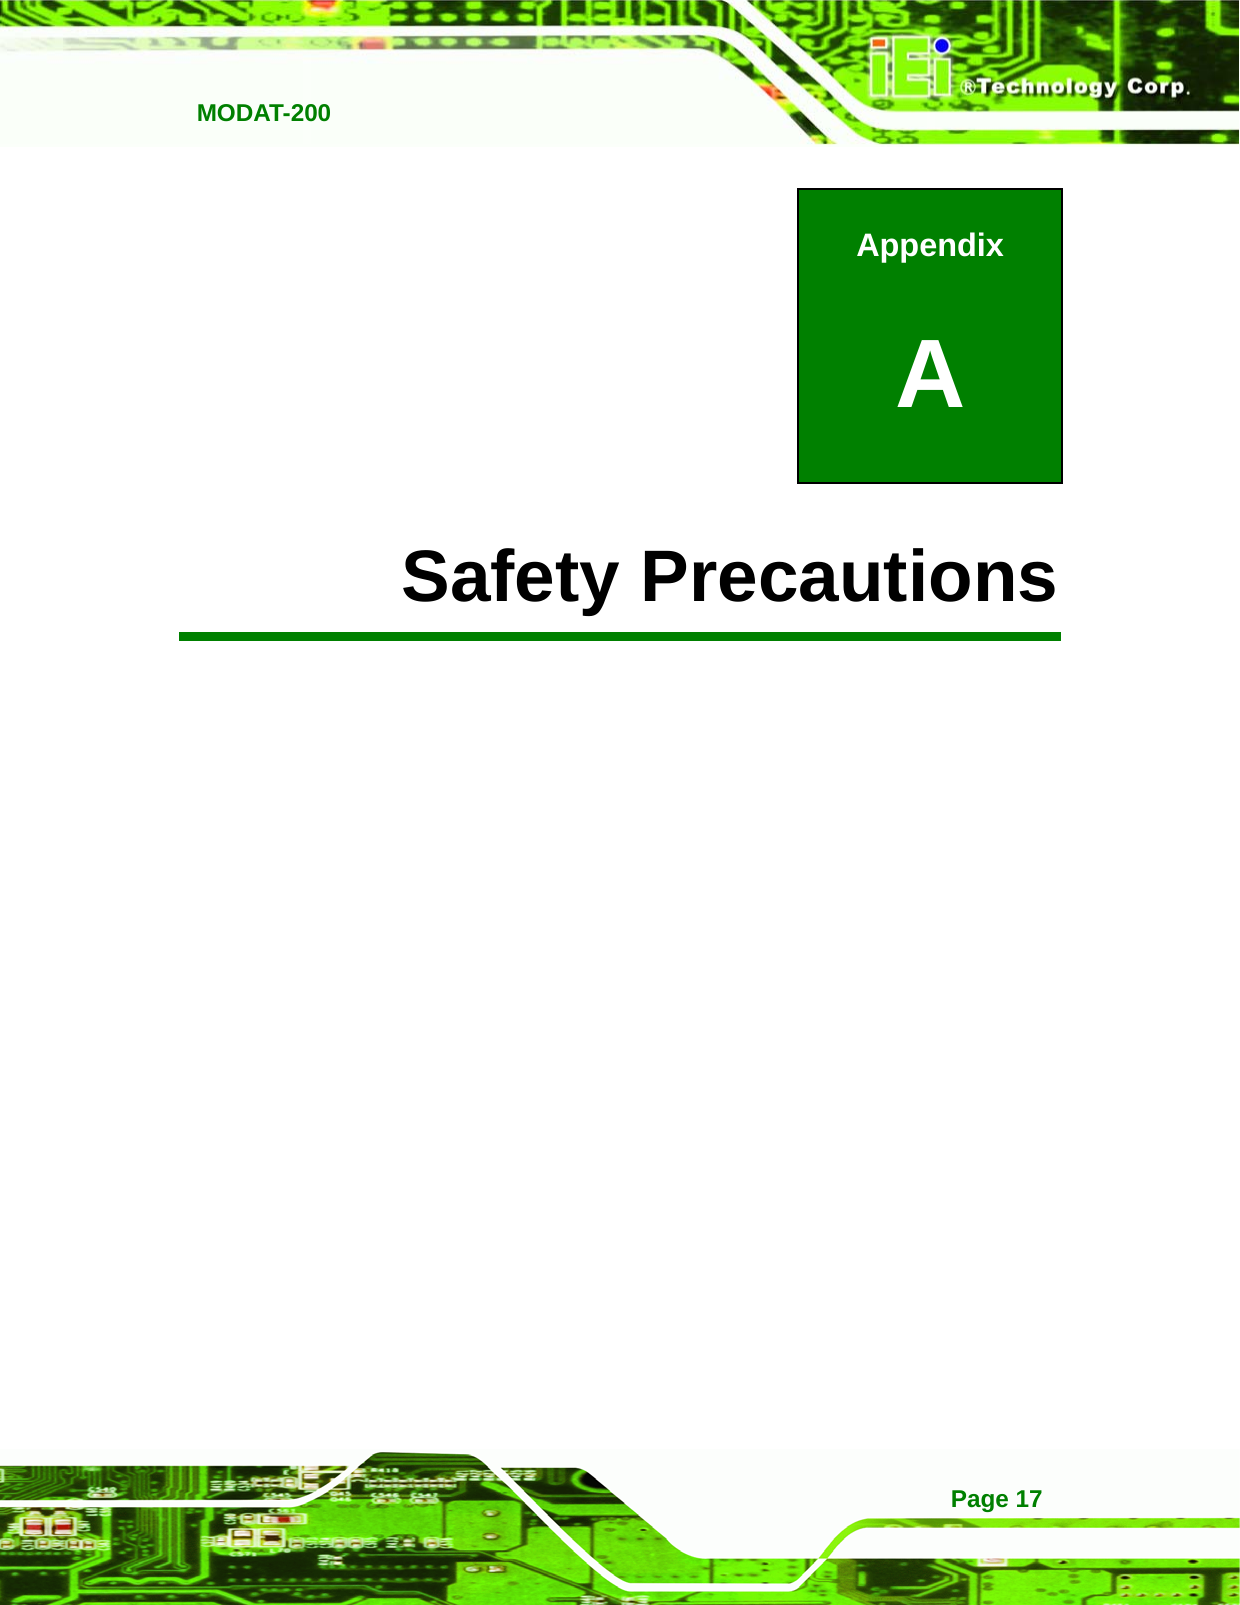   MODAT-200 Page 17Appendix A A Safety Precautions 